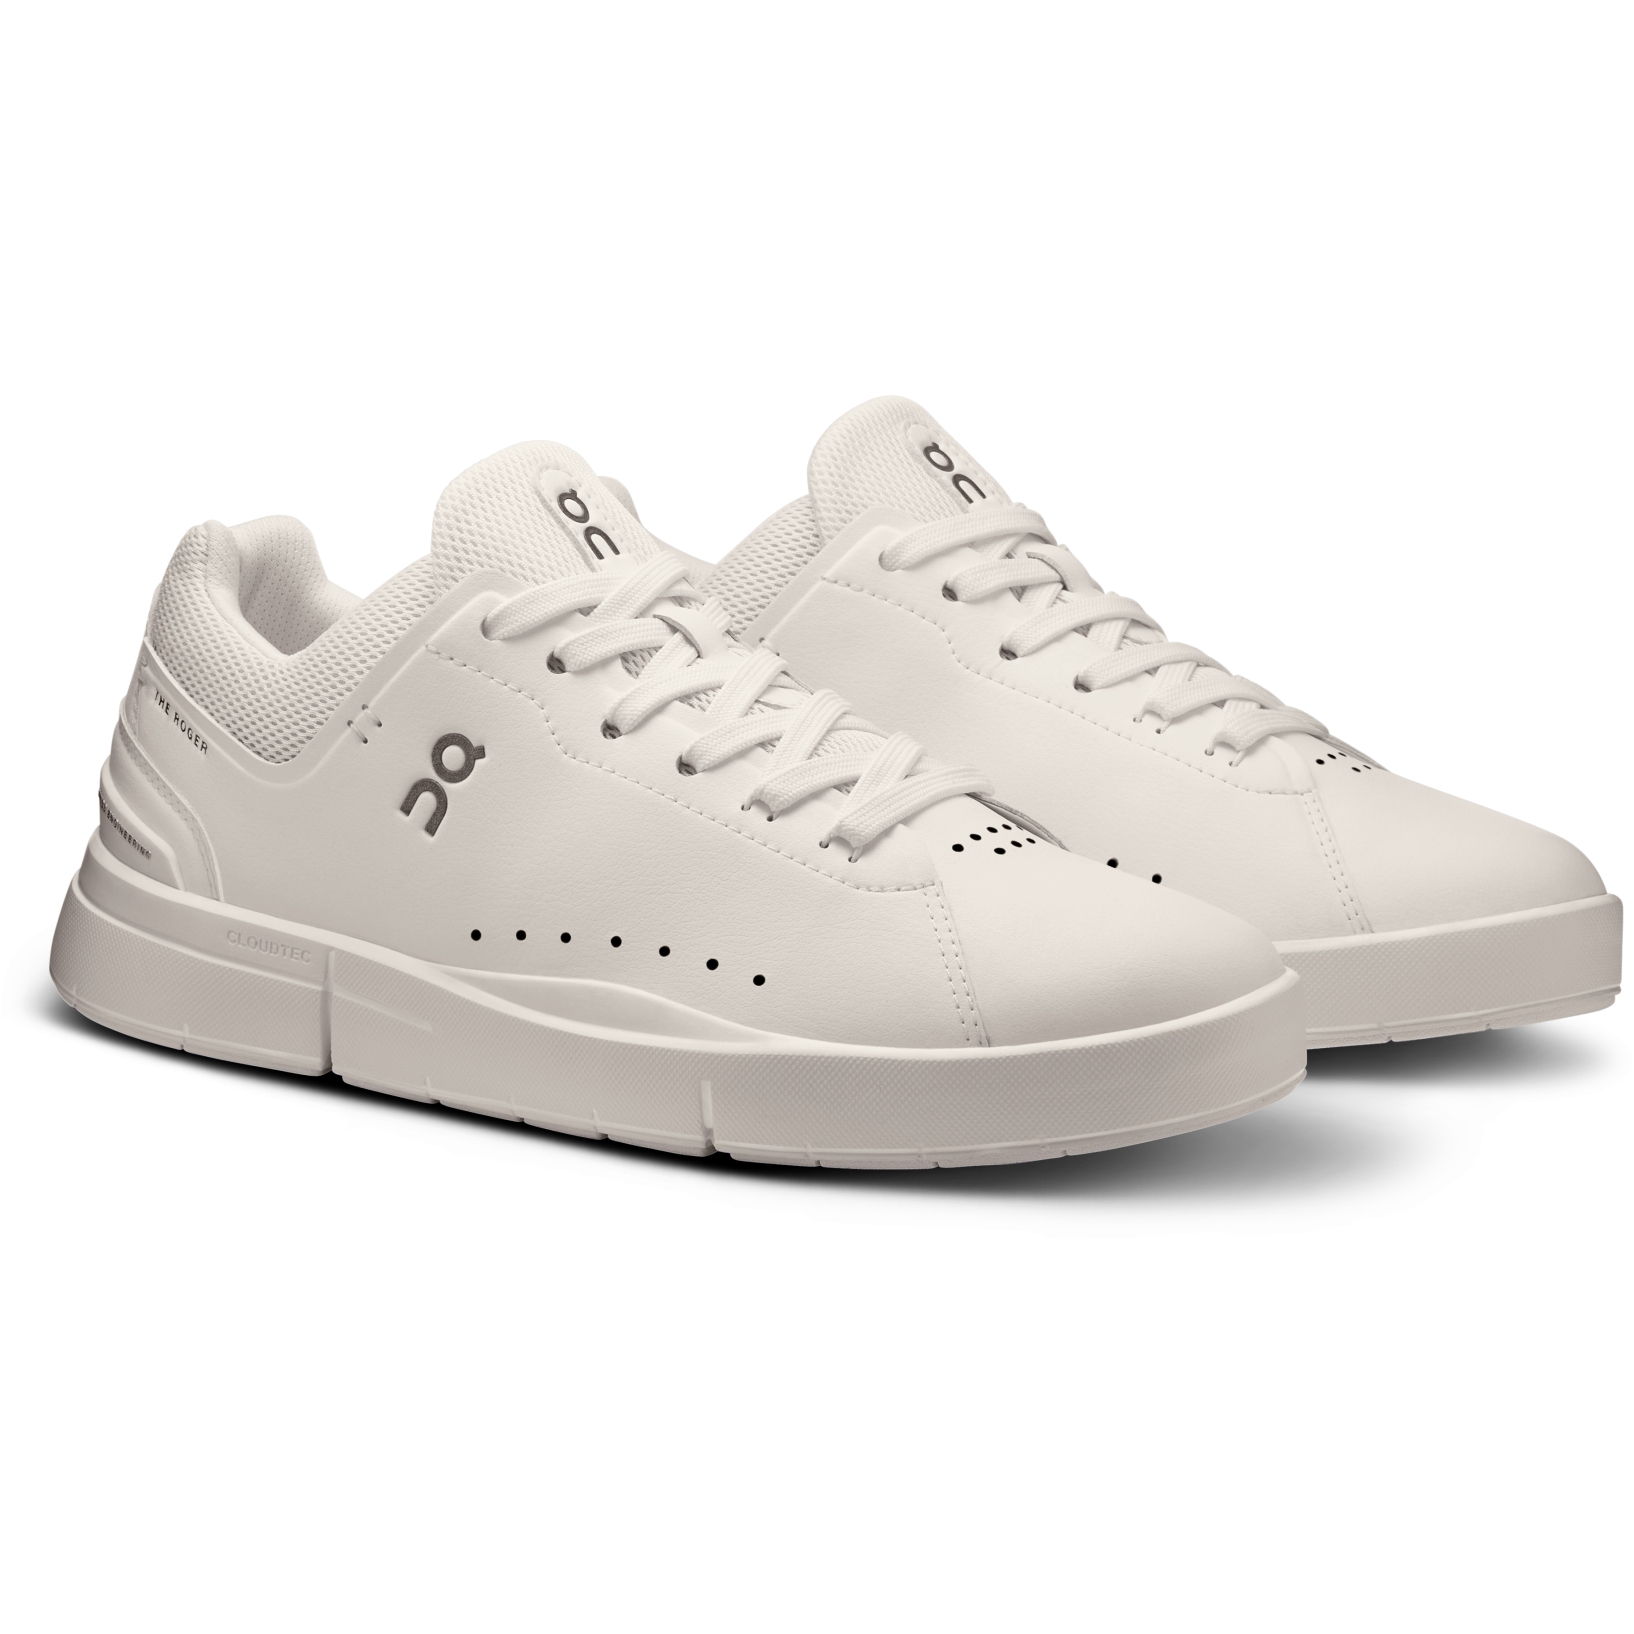 Productfoto van On The Roger Advantage Dames Sneaker - White | Undyed